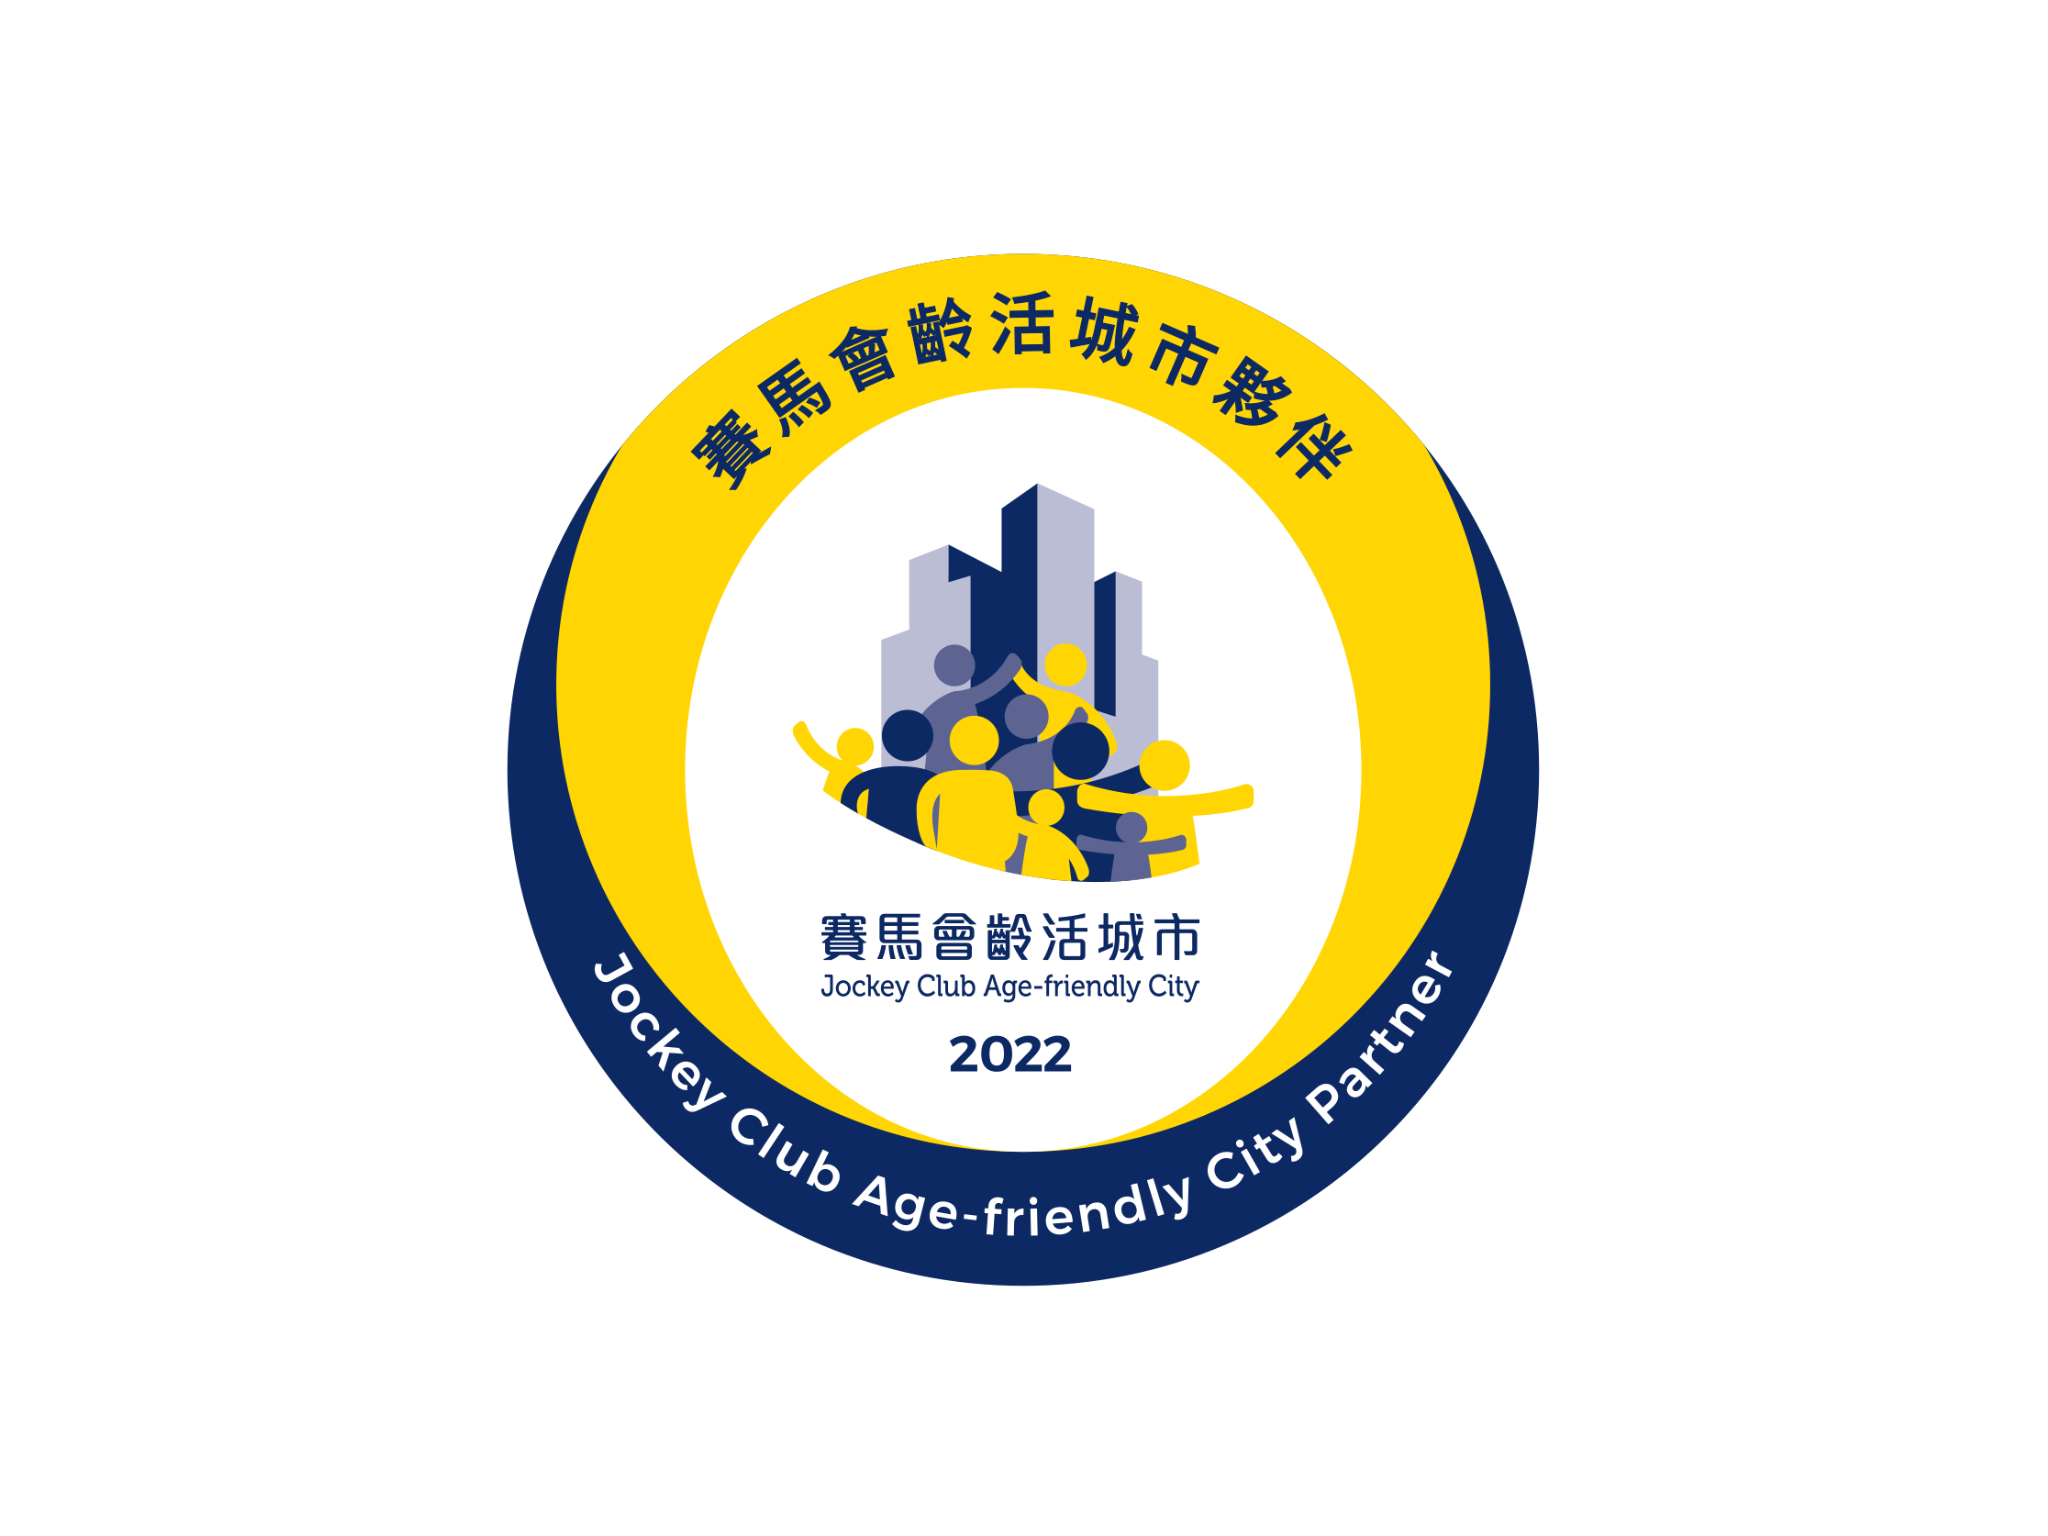 Jockey Club Age-friendly City Partners